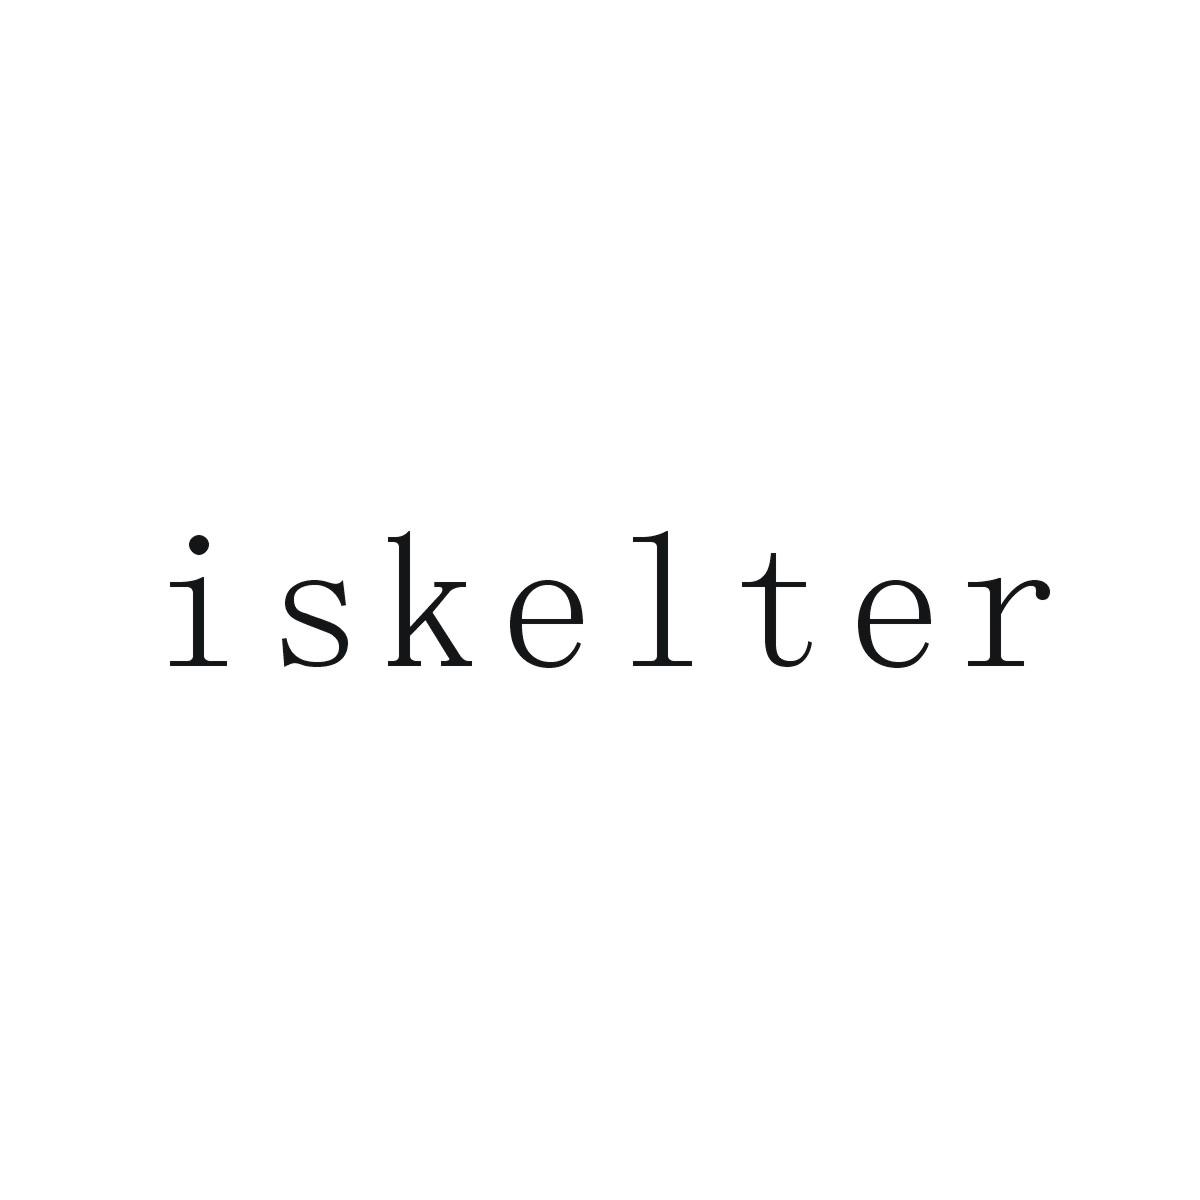 ISKELTER写字台商标转让费用买卖交易流程